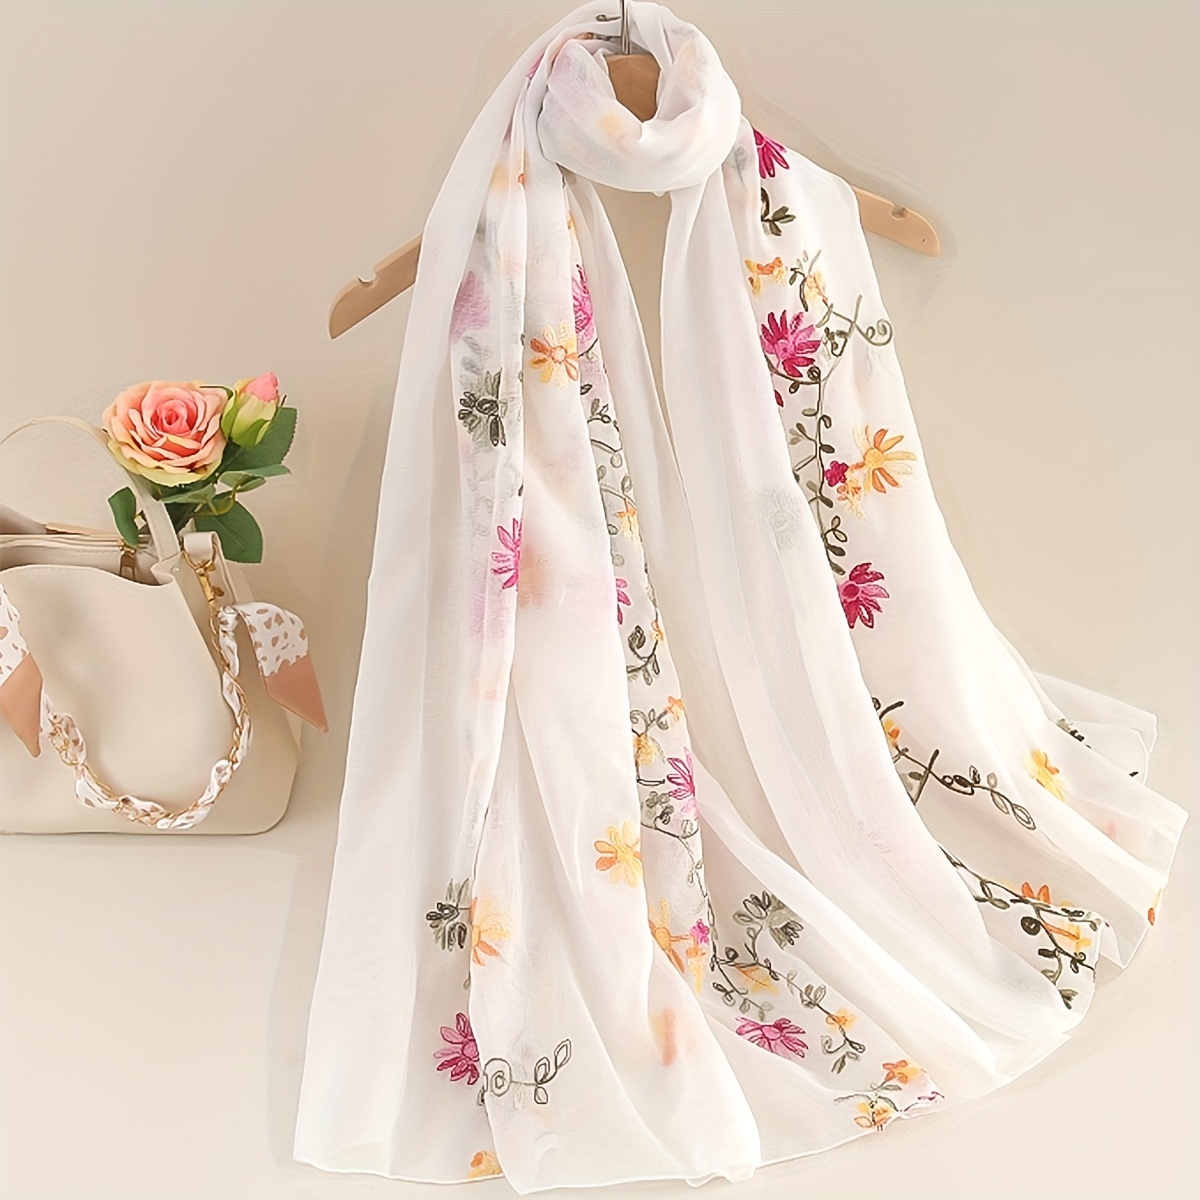 

Elegant Flower Embroidery Scarf Classic Solid Color Shawl Casual Bandana Windproof Head Wrap Hijab Travel Beach Towel